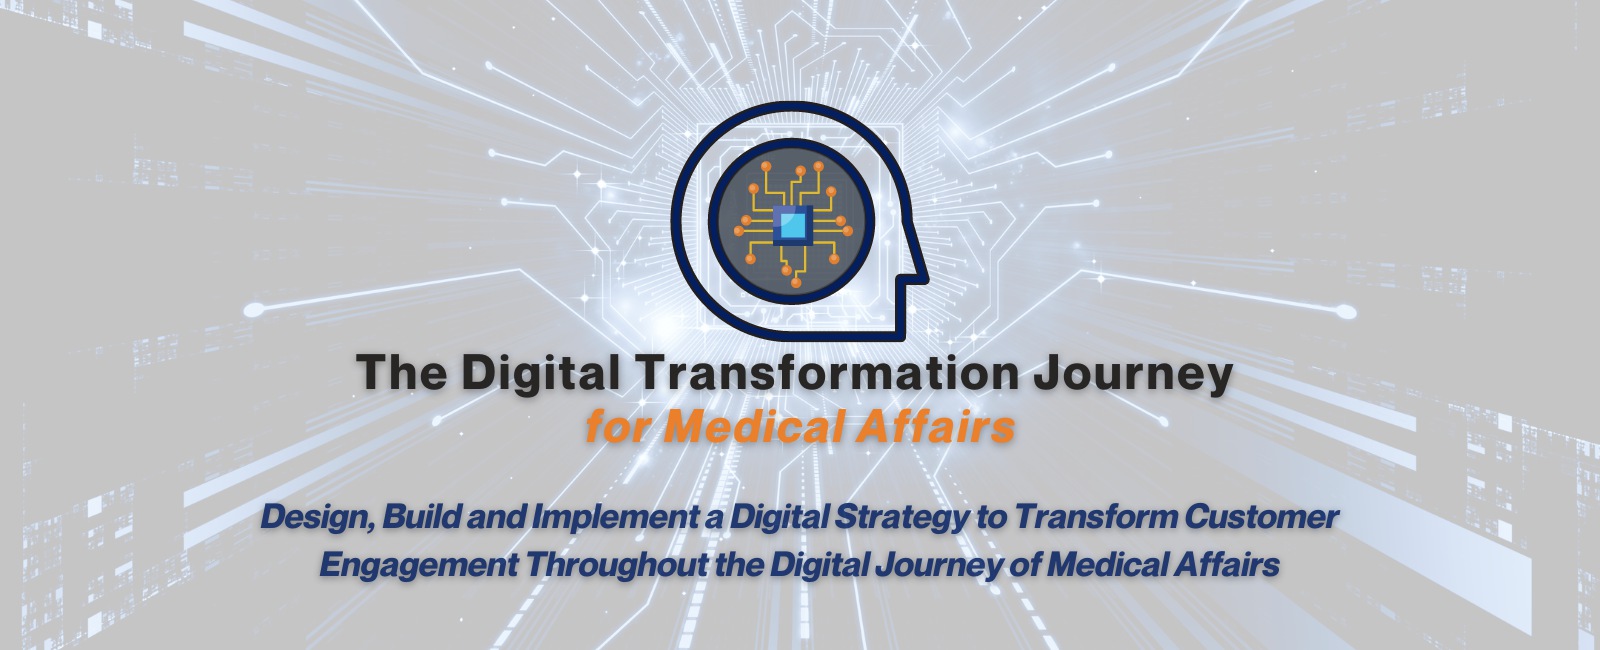 Digital Transformation Journey for Medical Affairs Virtual Summit